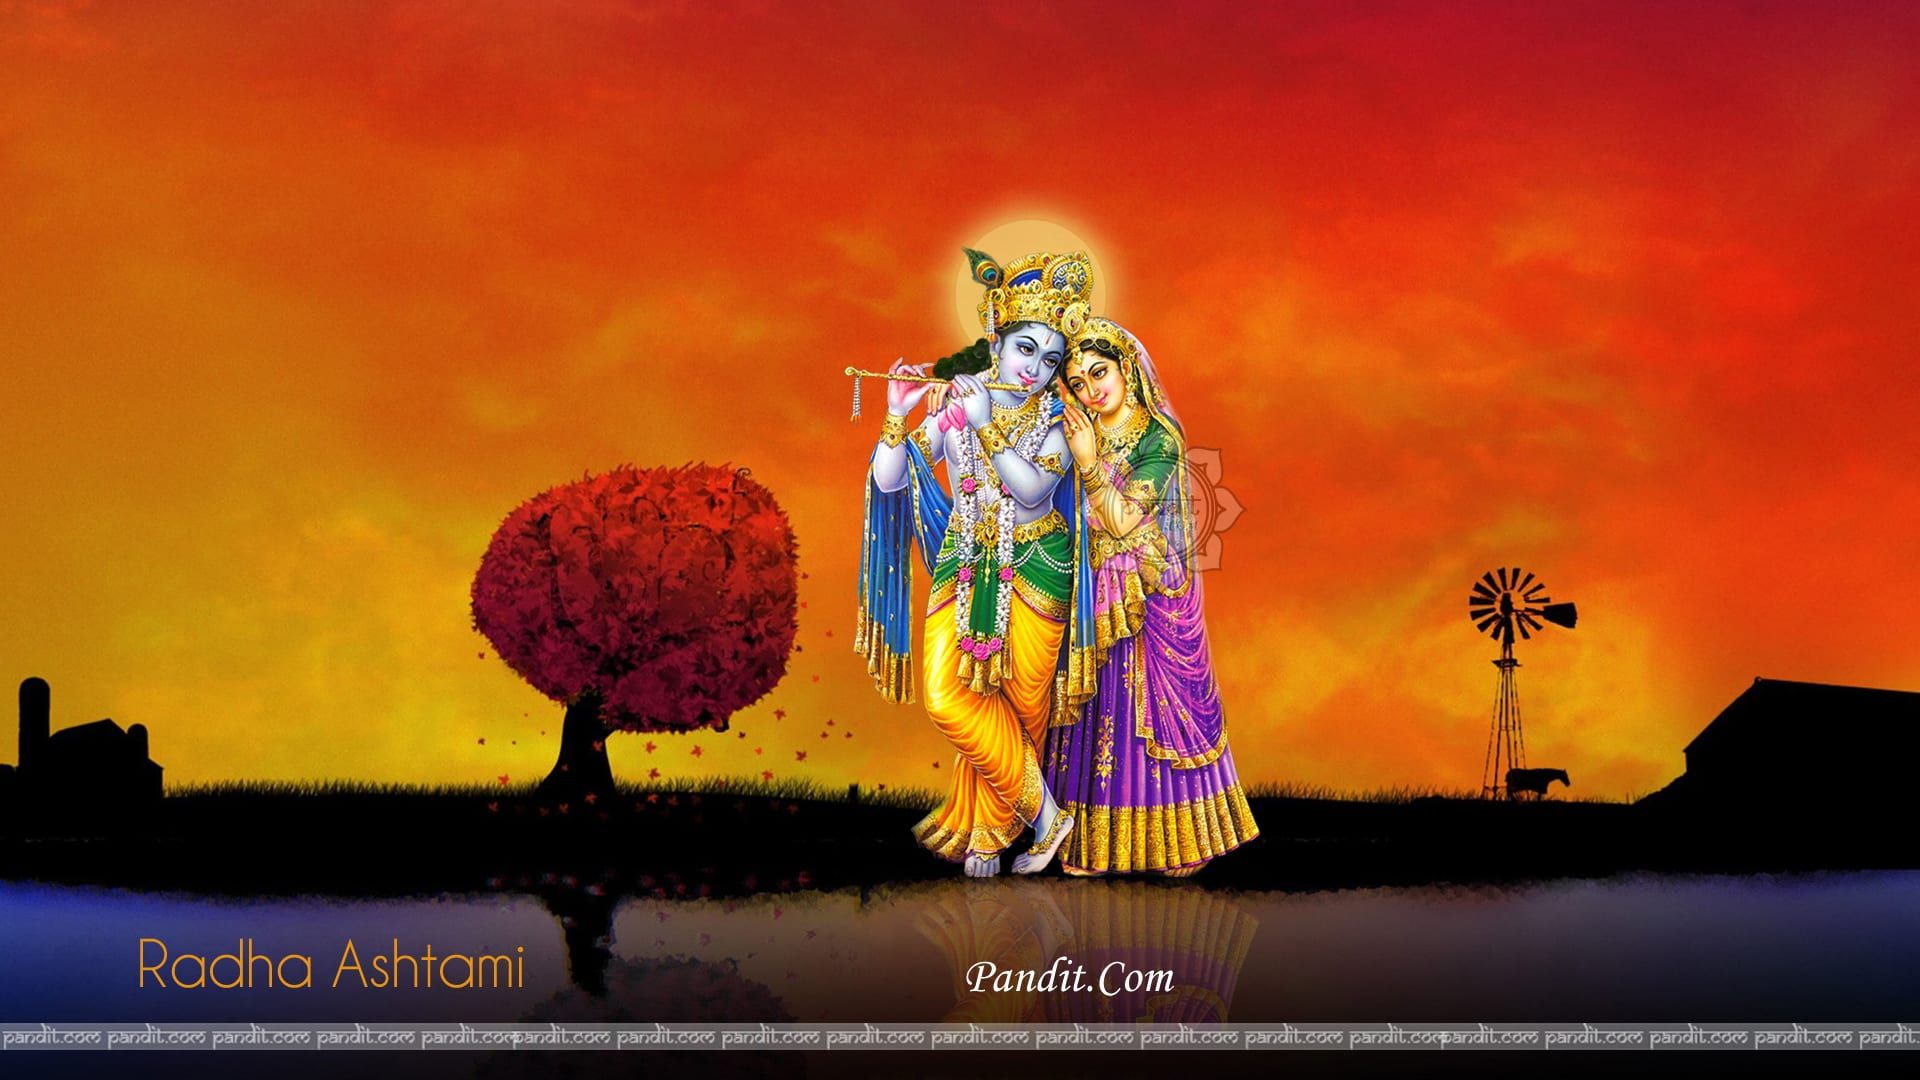 What Is The Reason Behind To Celebrate Radha Ashtami Festival